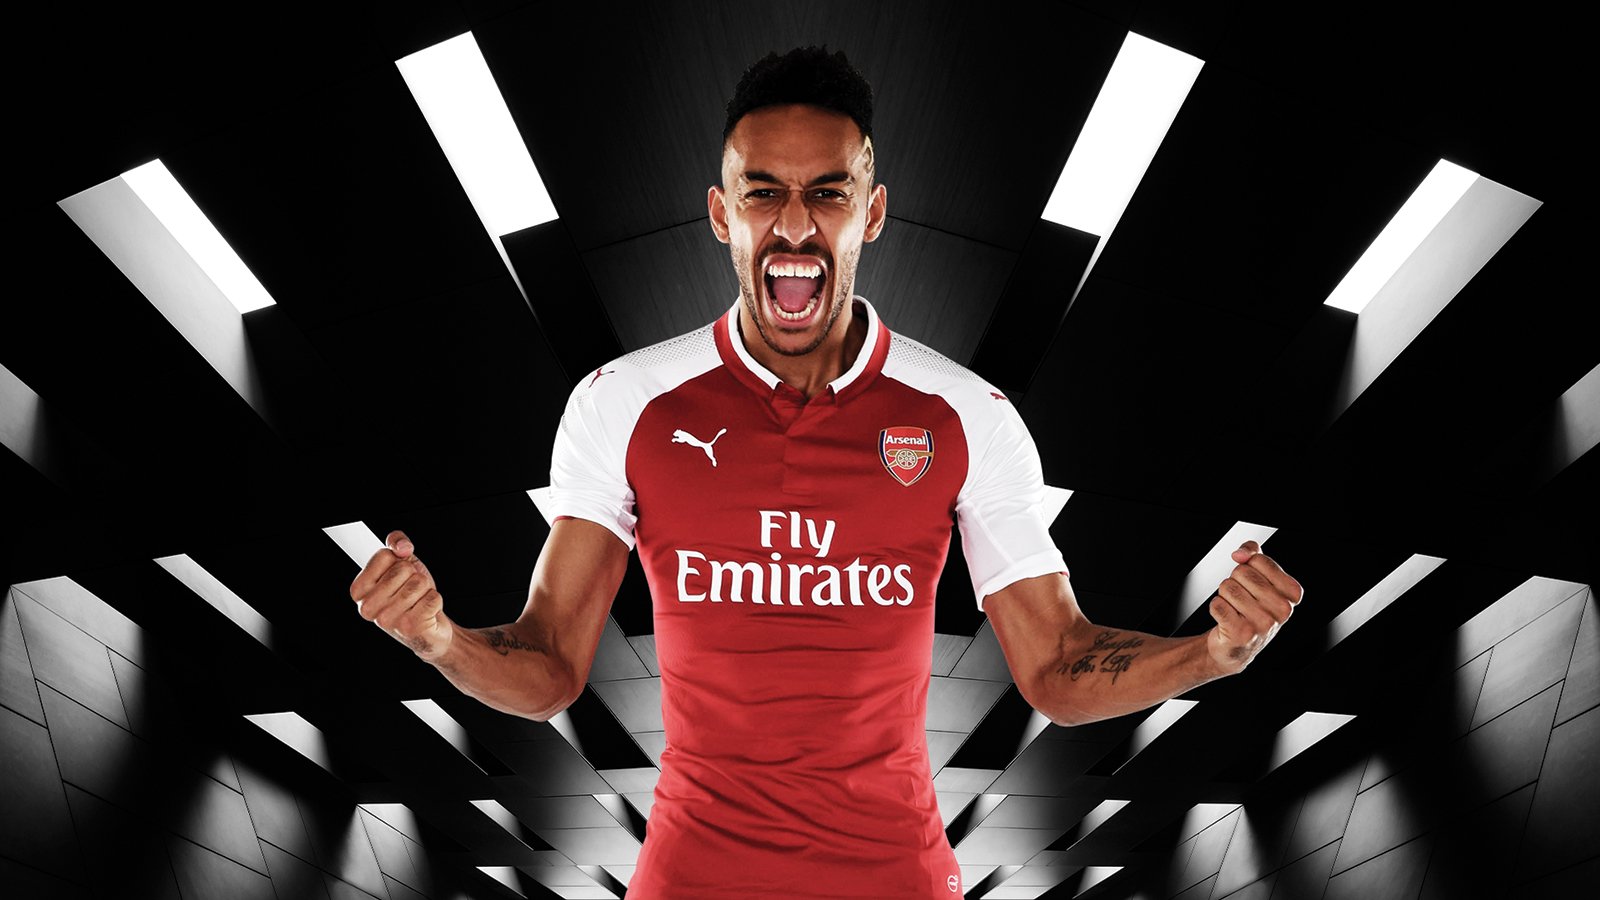 Pierre-Emerick Aubameyang signs | News | Arsenal.com